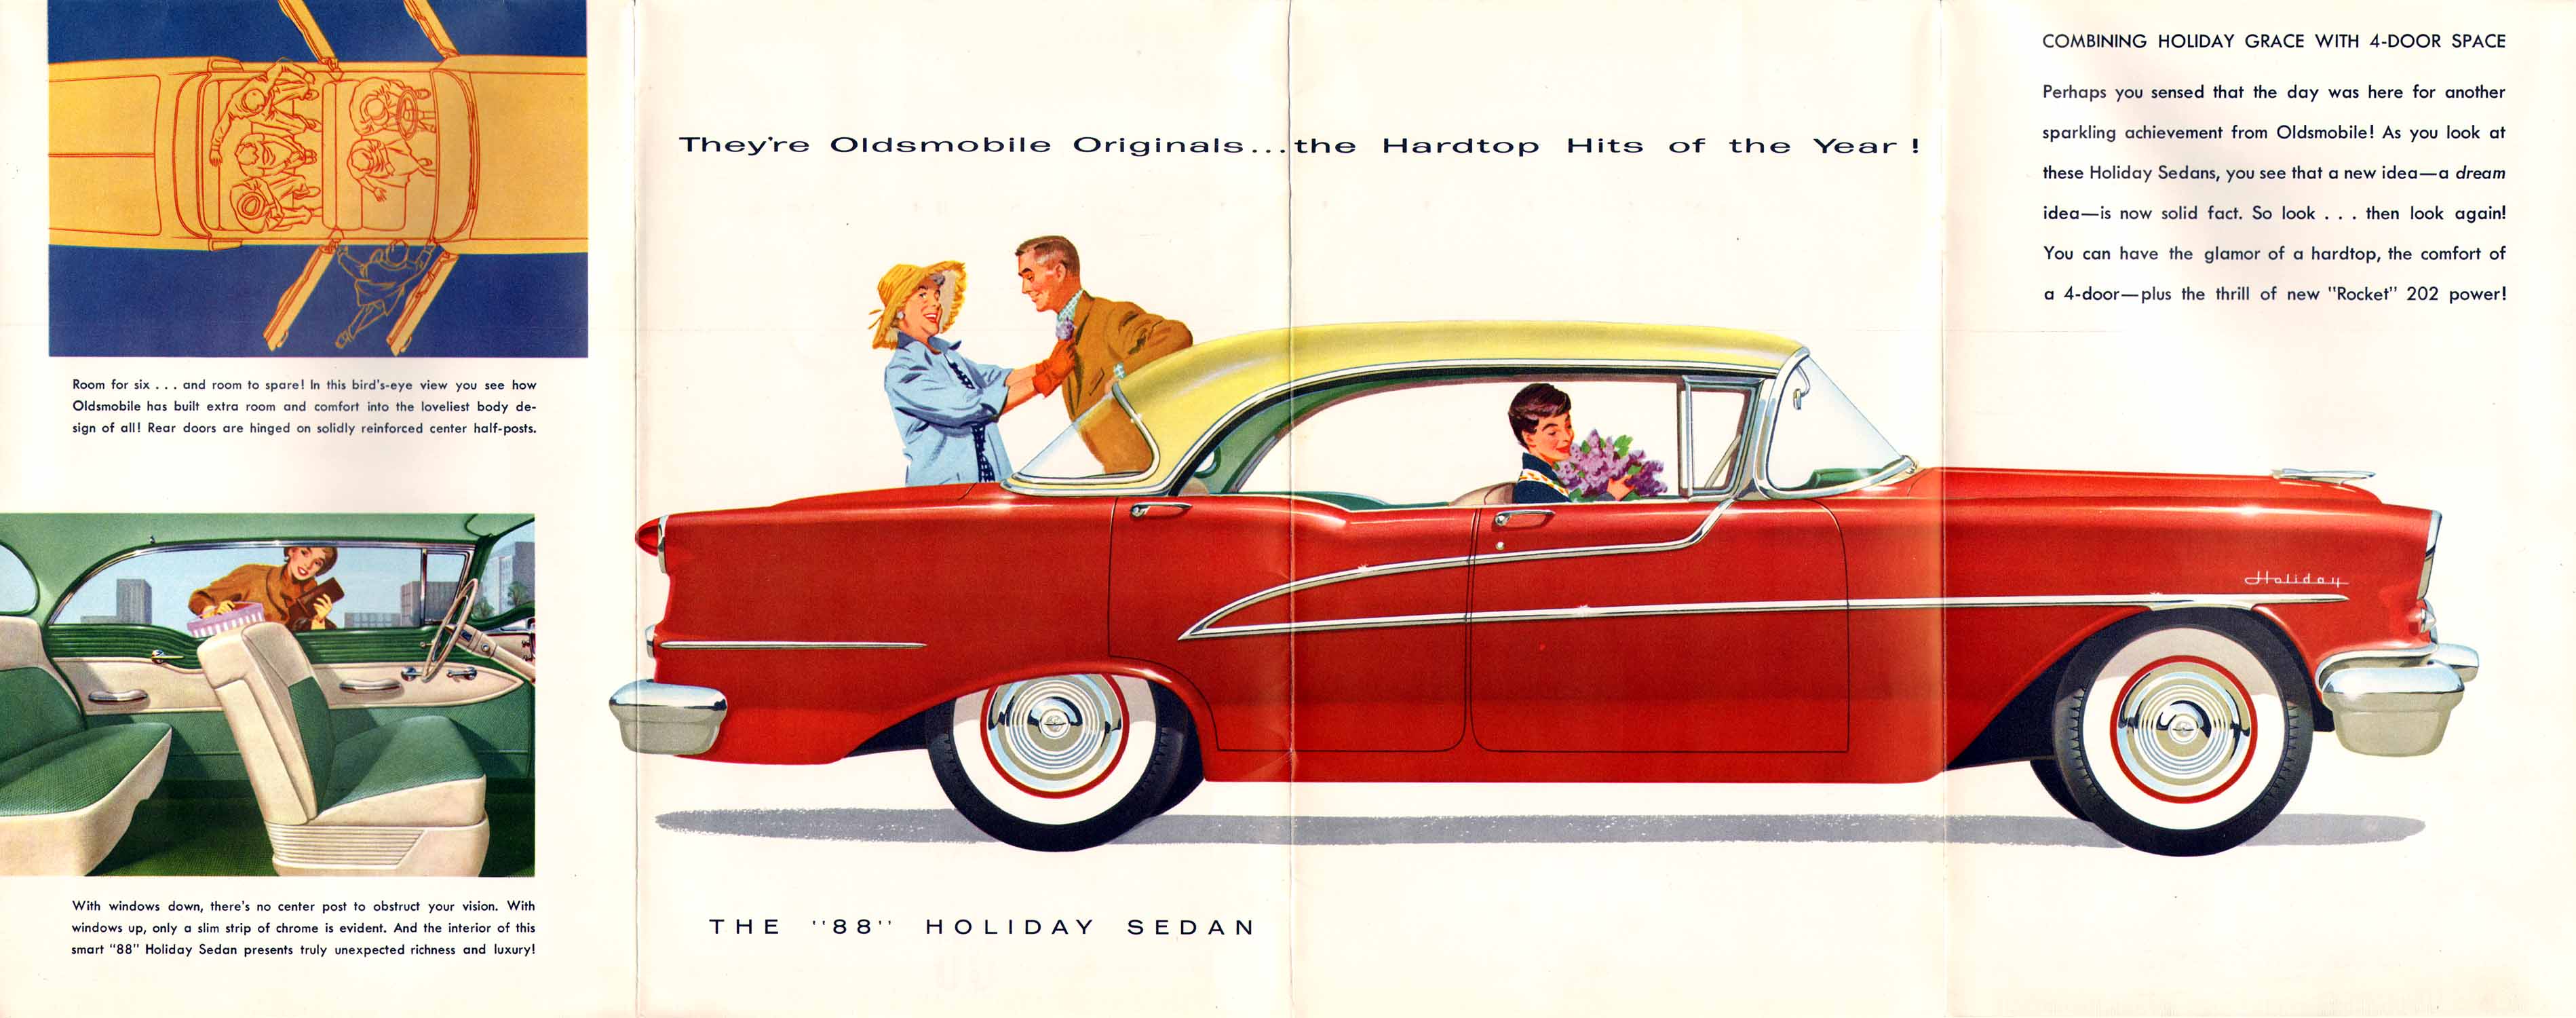 1955 Oldsmobile Holiday Sedan Foldout Page 3